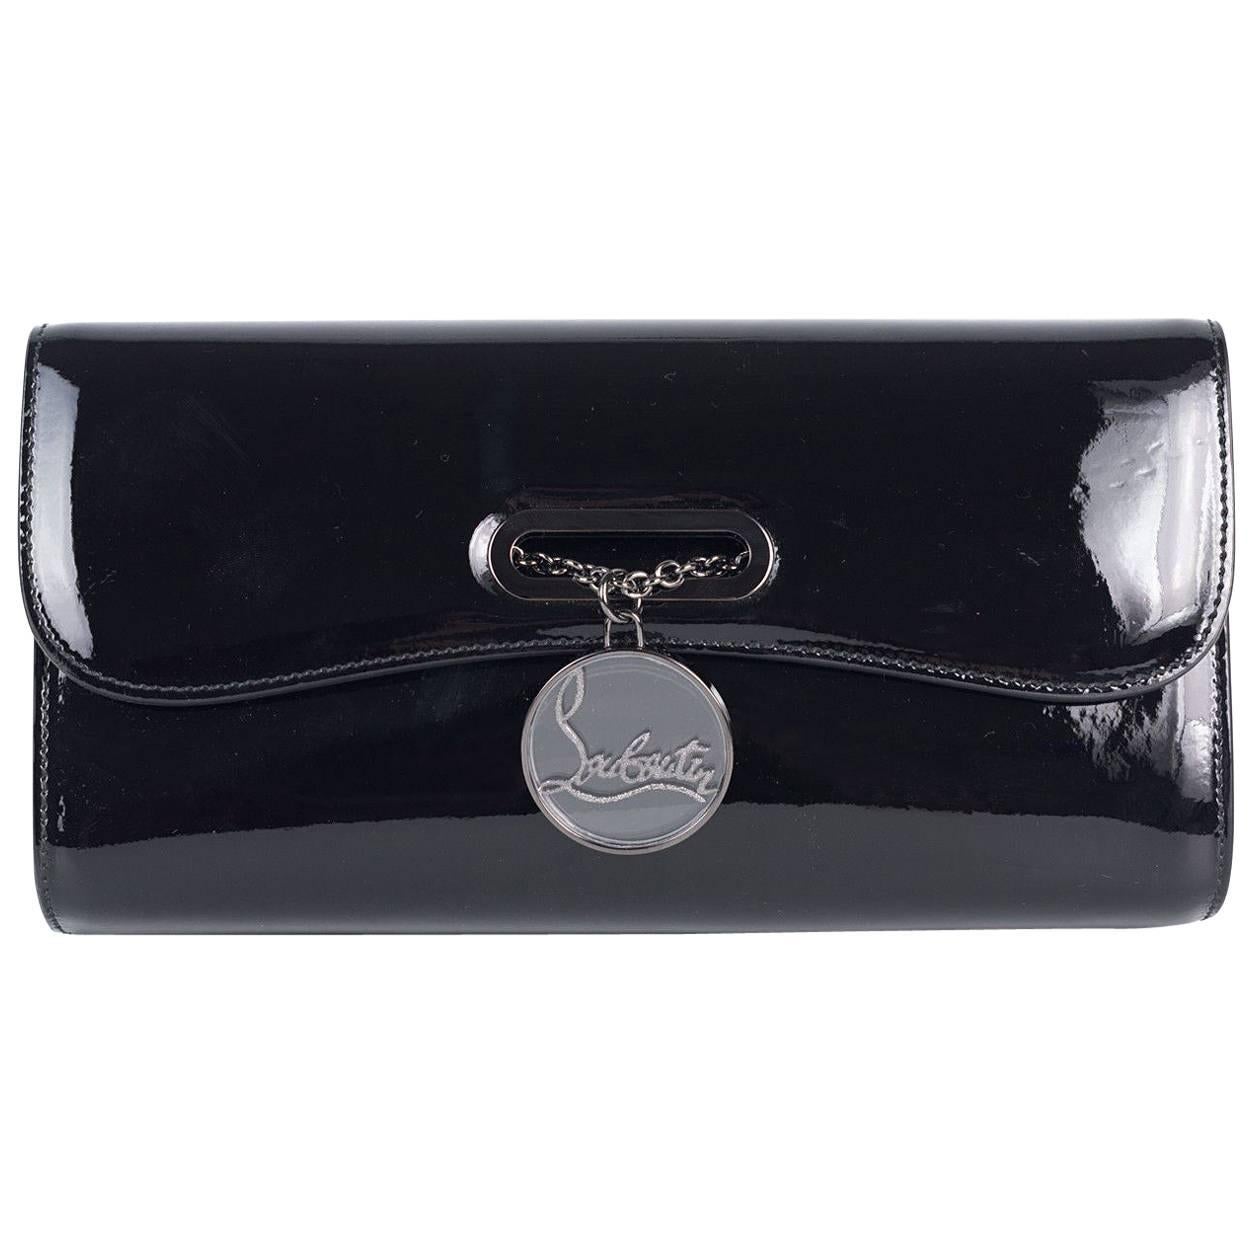 Christian Louboutin Women's Black Patent Leather Rivera Clutch Bag